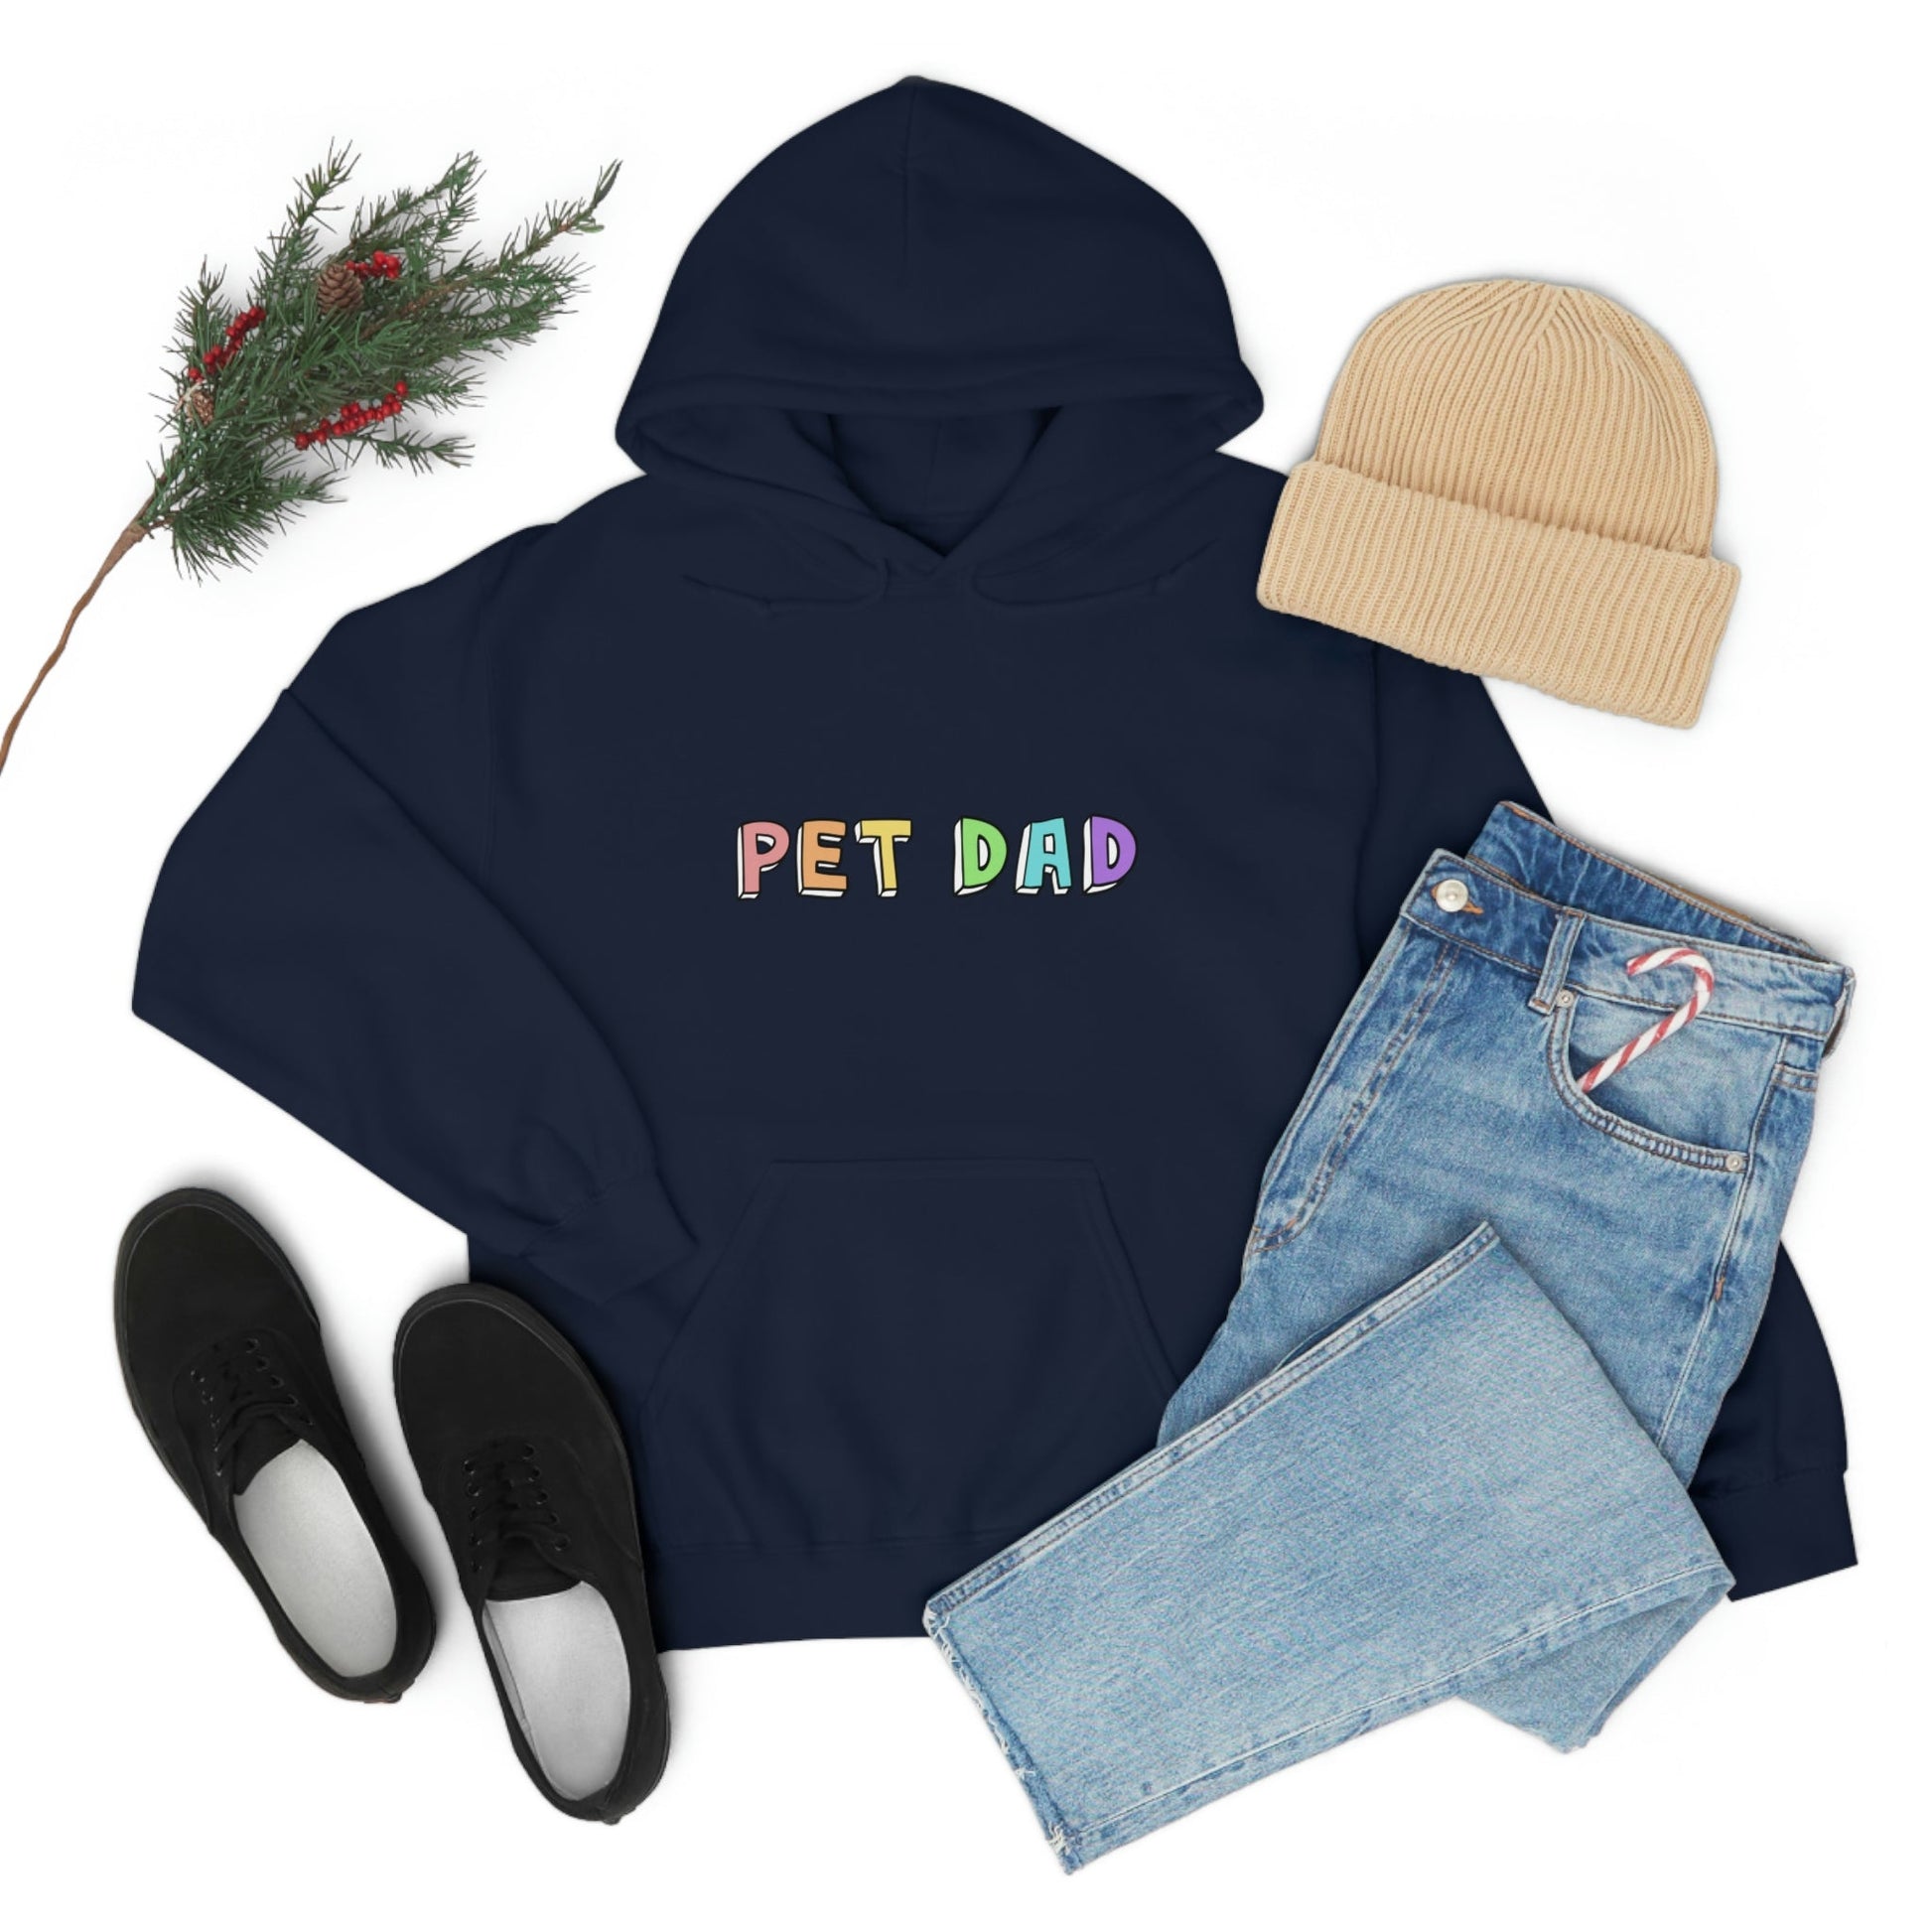 Pet Dad | Hooded Sweatshirt - Detezi Designs-28670832176800417439